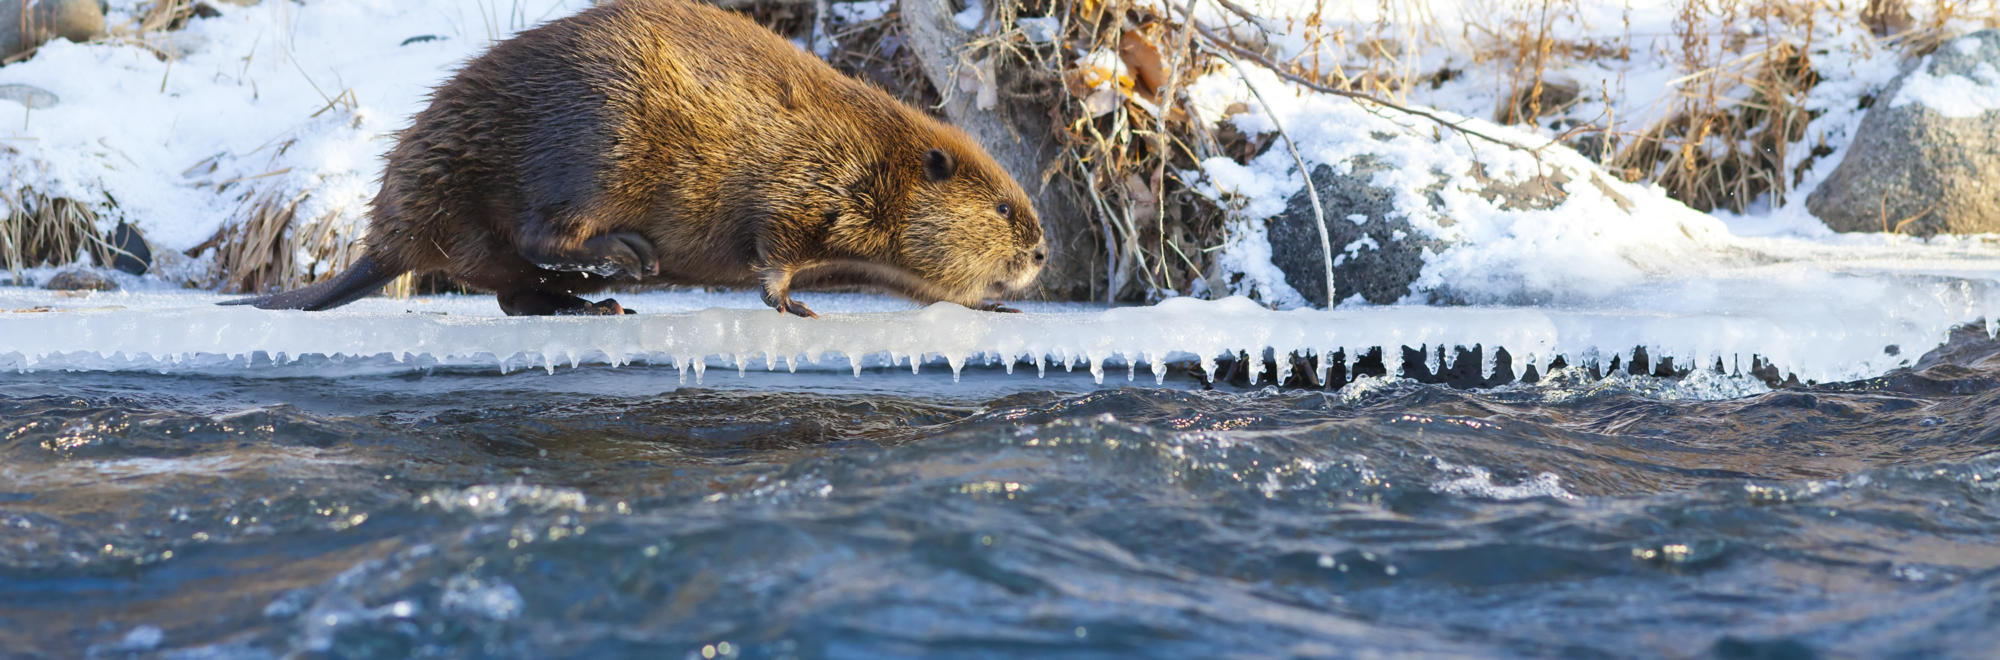 Beaver in winter near river